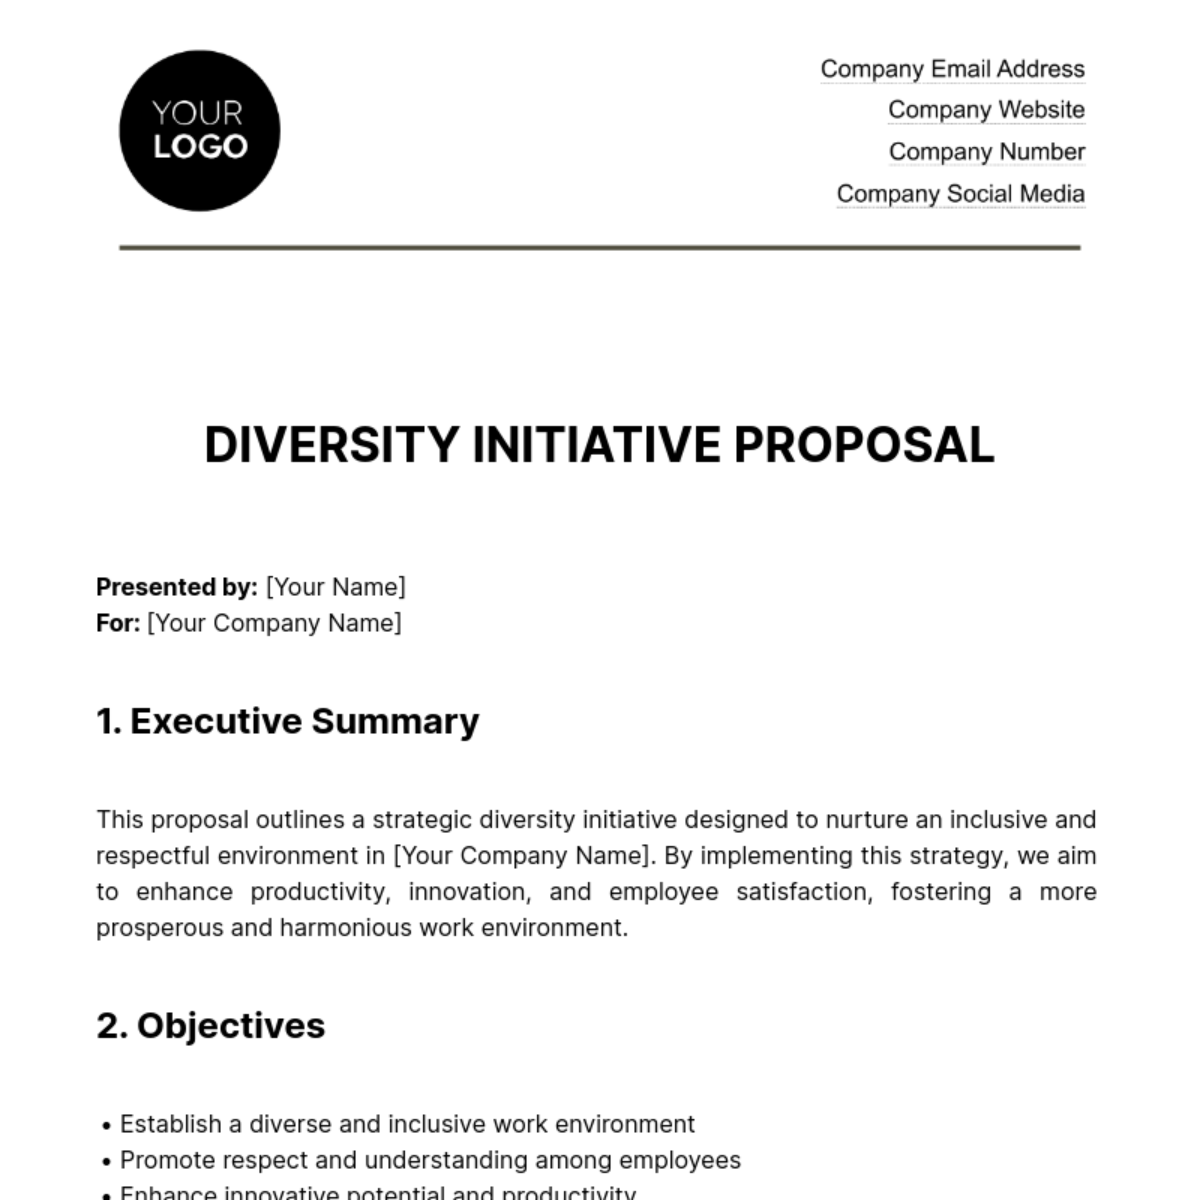 Diversity Initiative Proposal HR Template